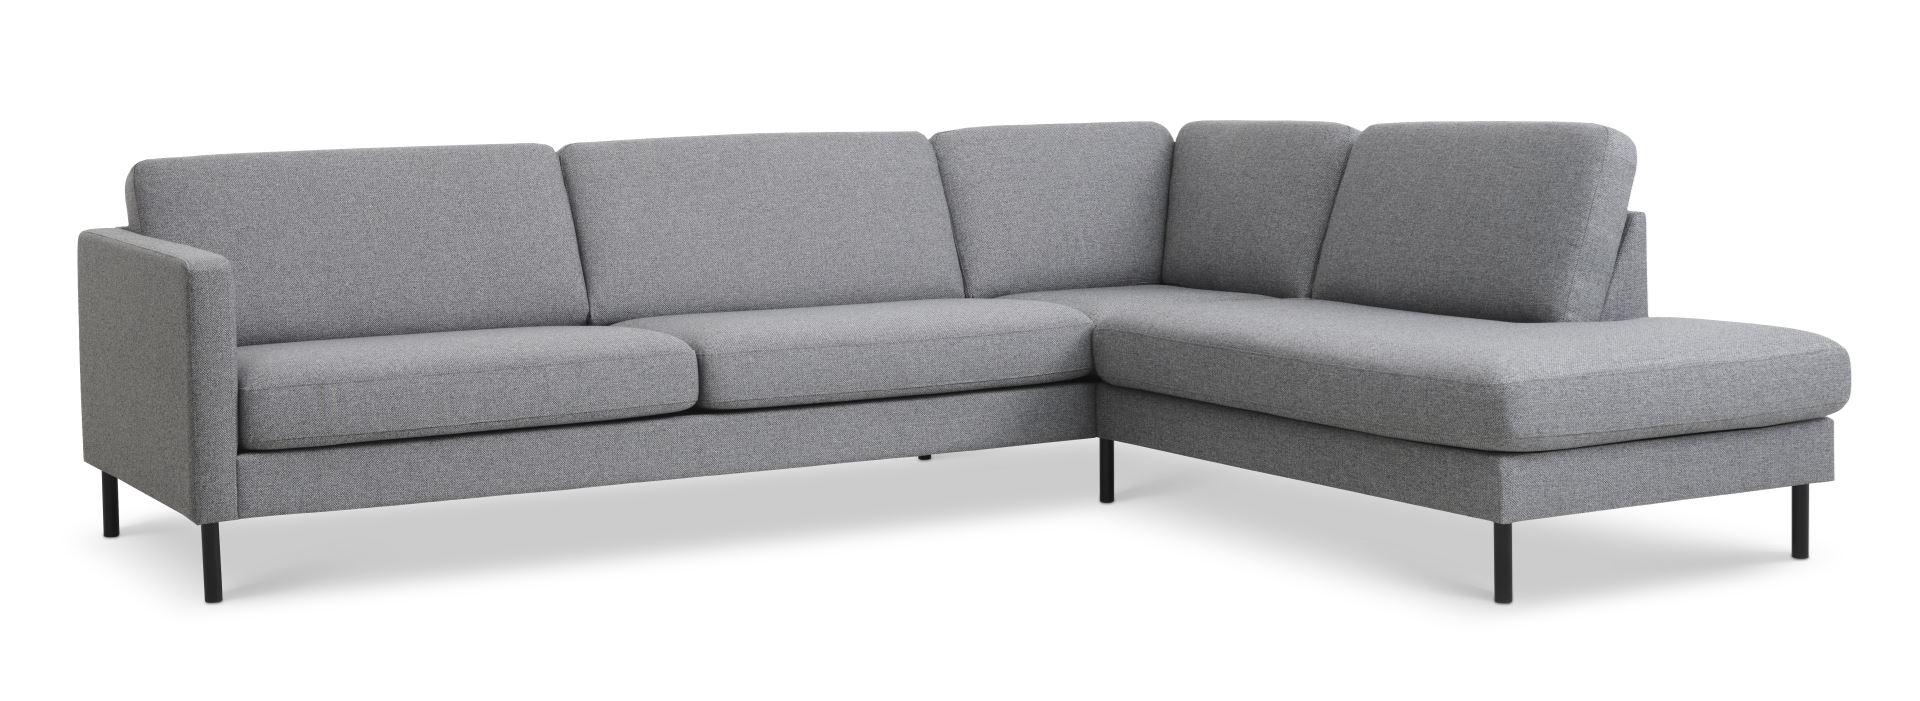 Ask sæt 61 stor OE sofa, m. højre chaiselong - lys granitgrå polyester stof og sort metal